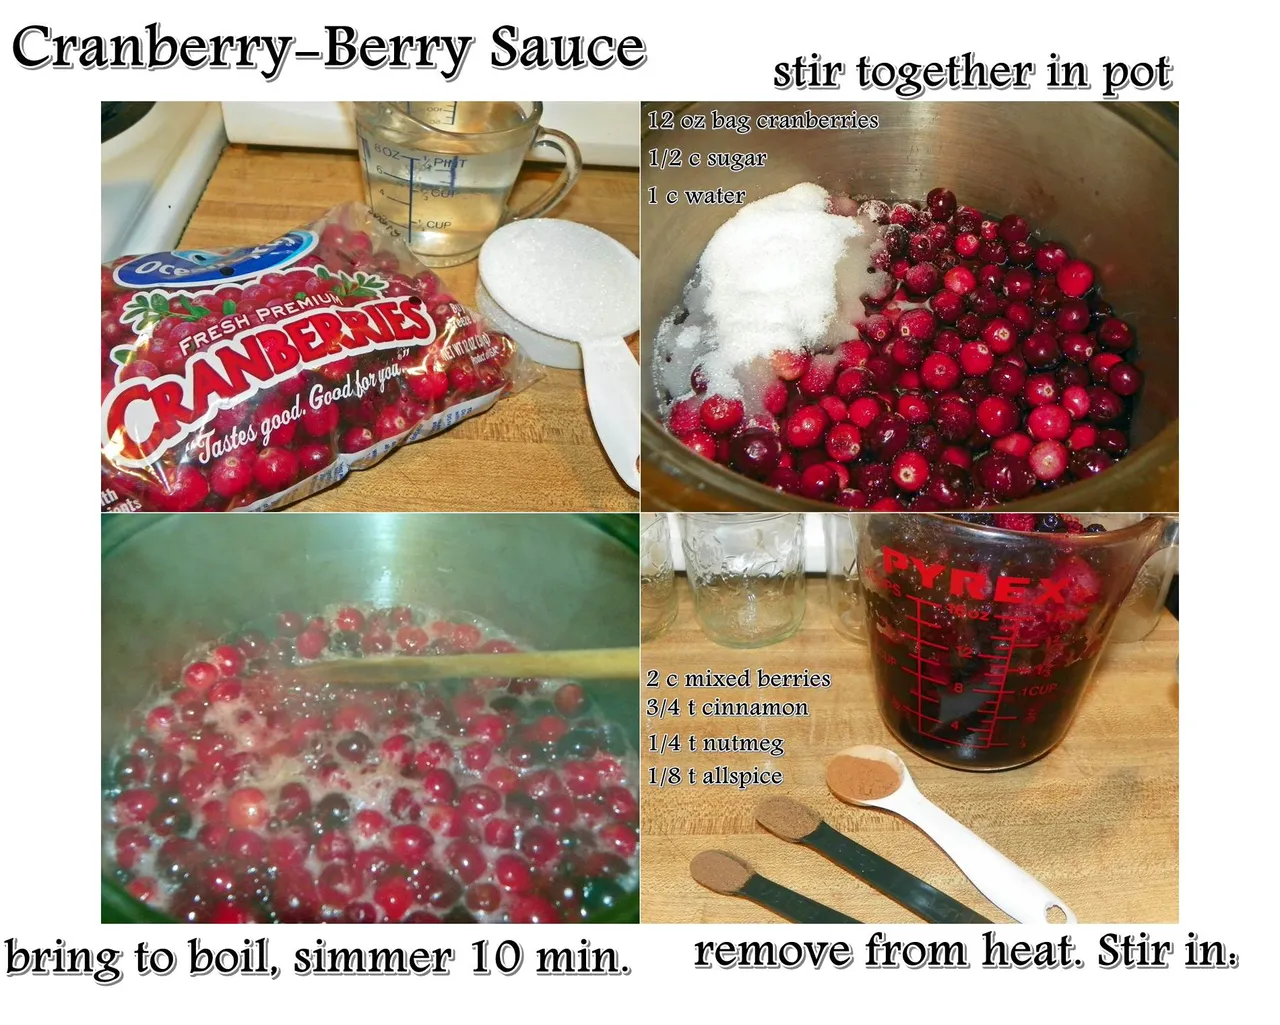 cranberrysauce01.jpg